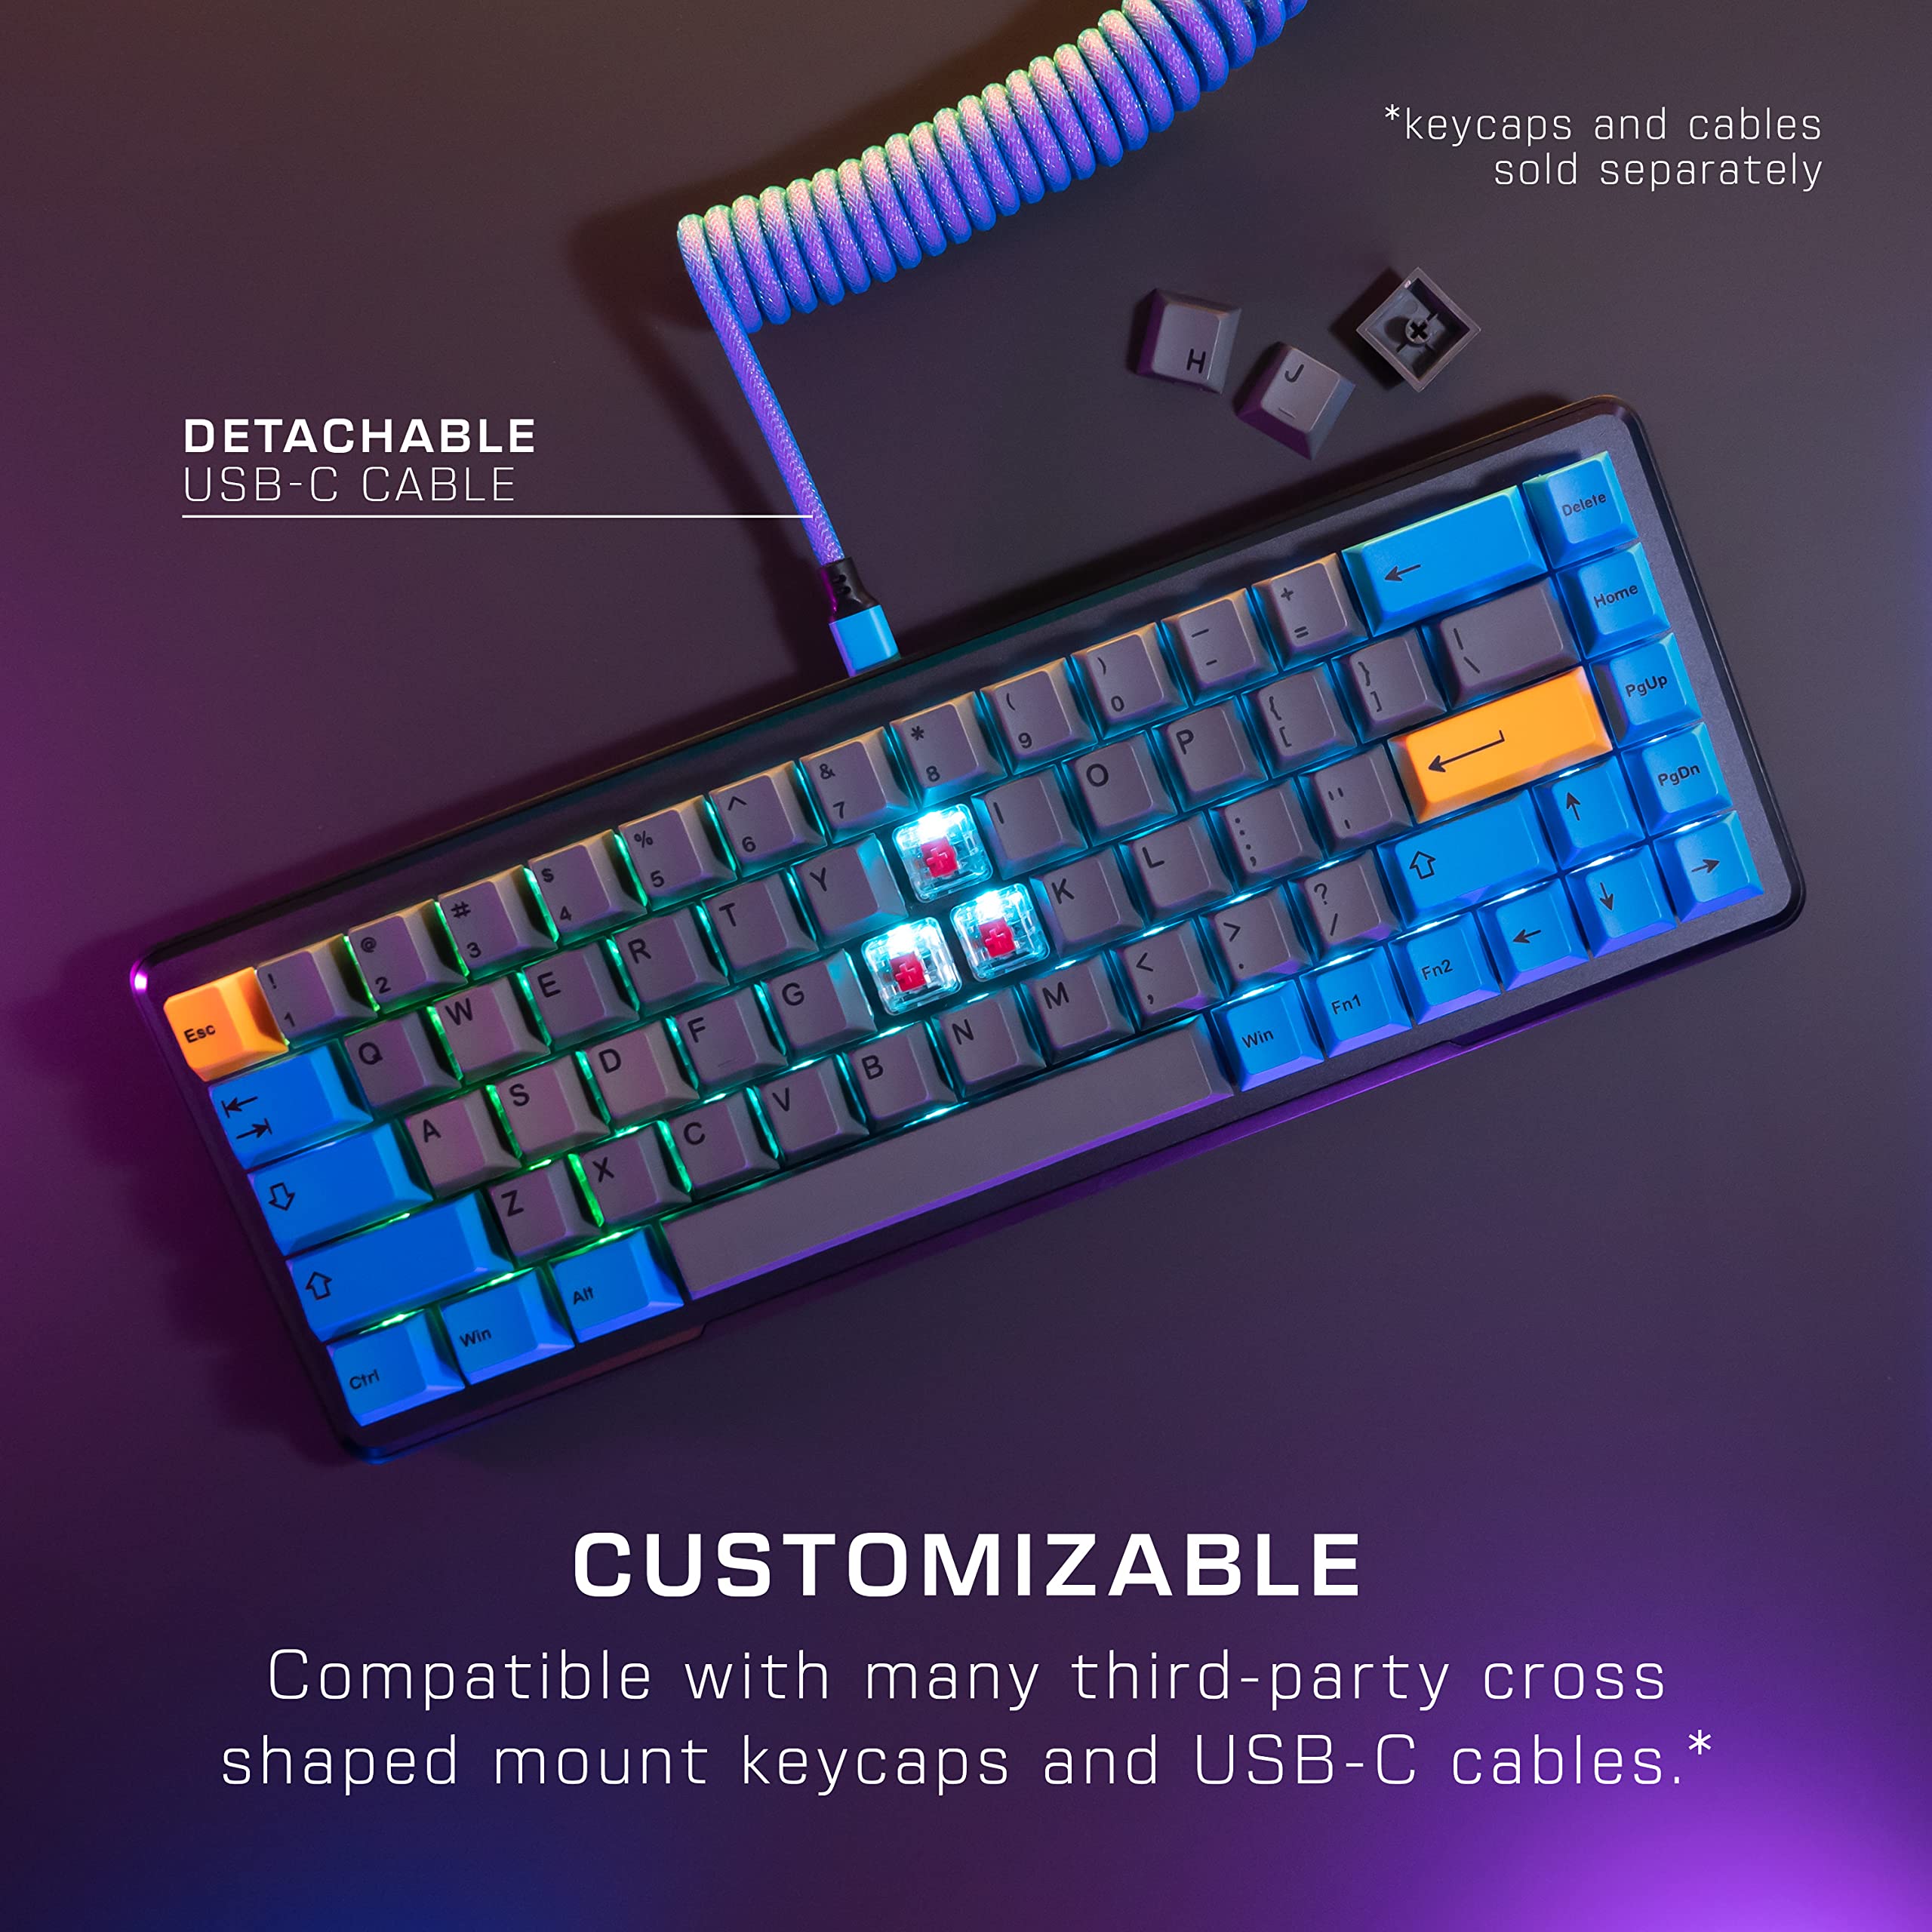 ROCCAT USB Vulcan II Mini – 65% Optical PC Gaming Keyboard with Customizable RGB Illumination, Detachable Cable, Button Duplicator, Aluminum Plate, 100M Keystroke Durability - Black (ROC-12-043)